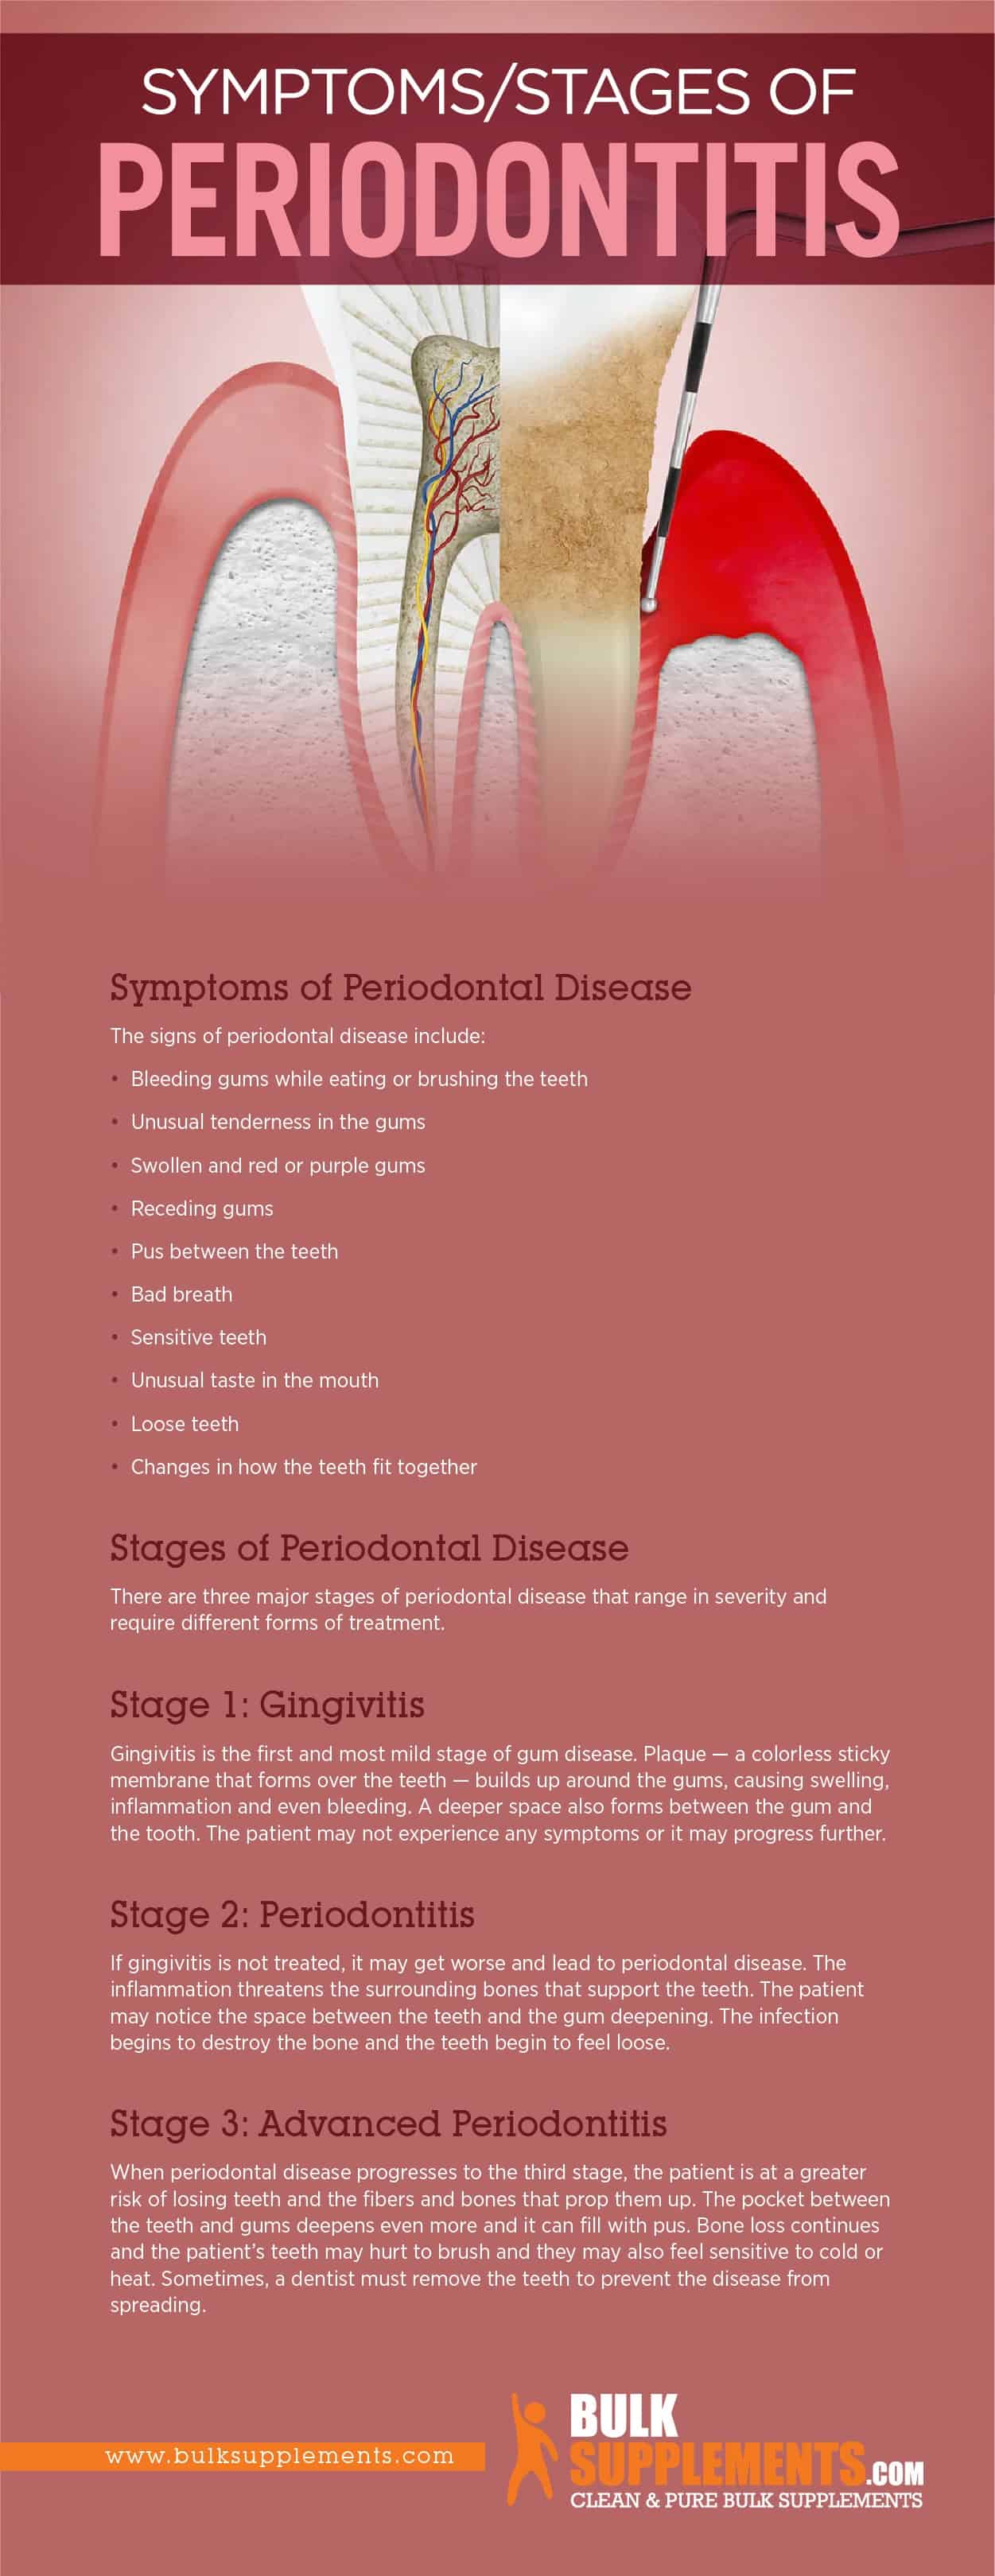 Symptoms/Stages of Periodontal Disease